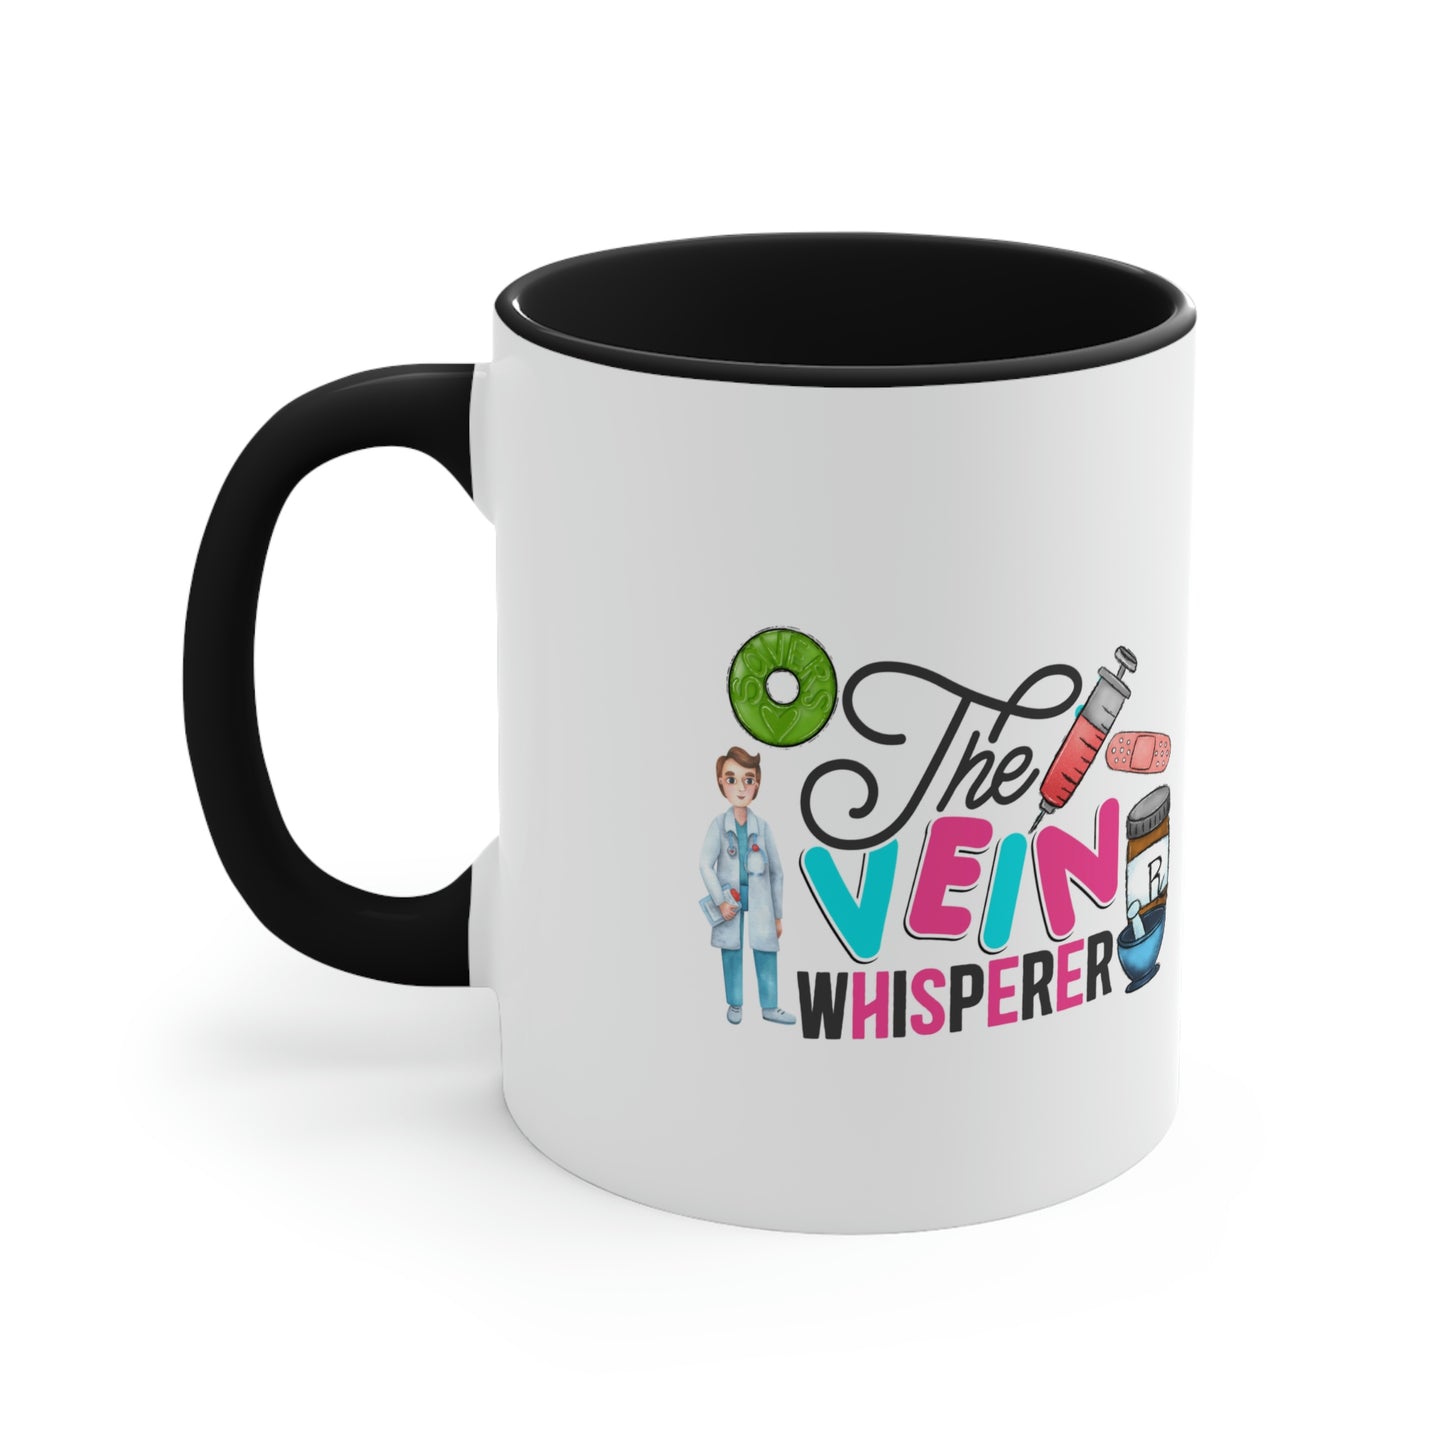 Nurse, Rn, Male 3, The Vein Whisperer, Coffee Mug, 11oz